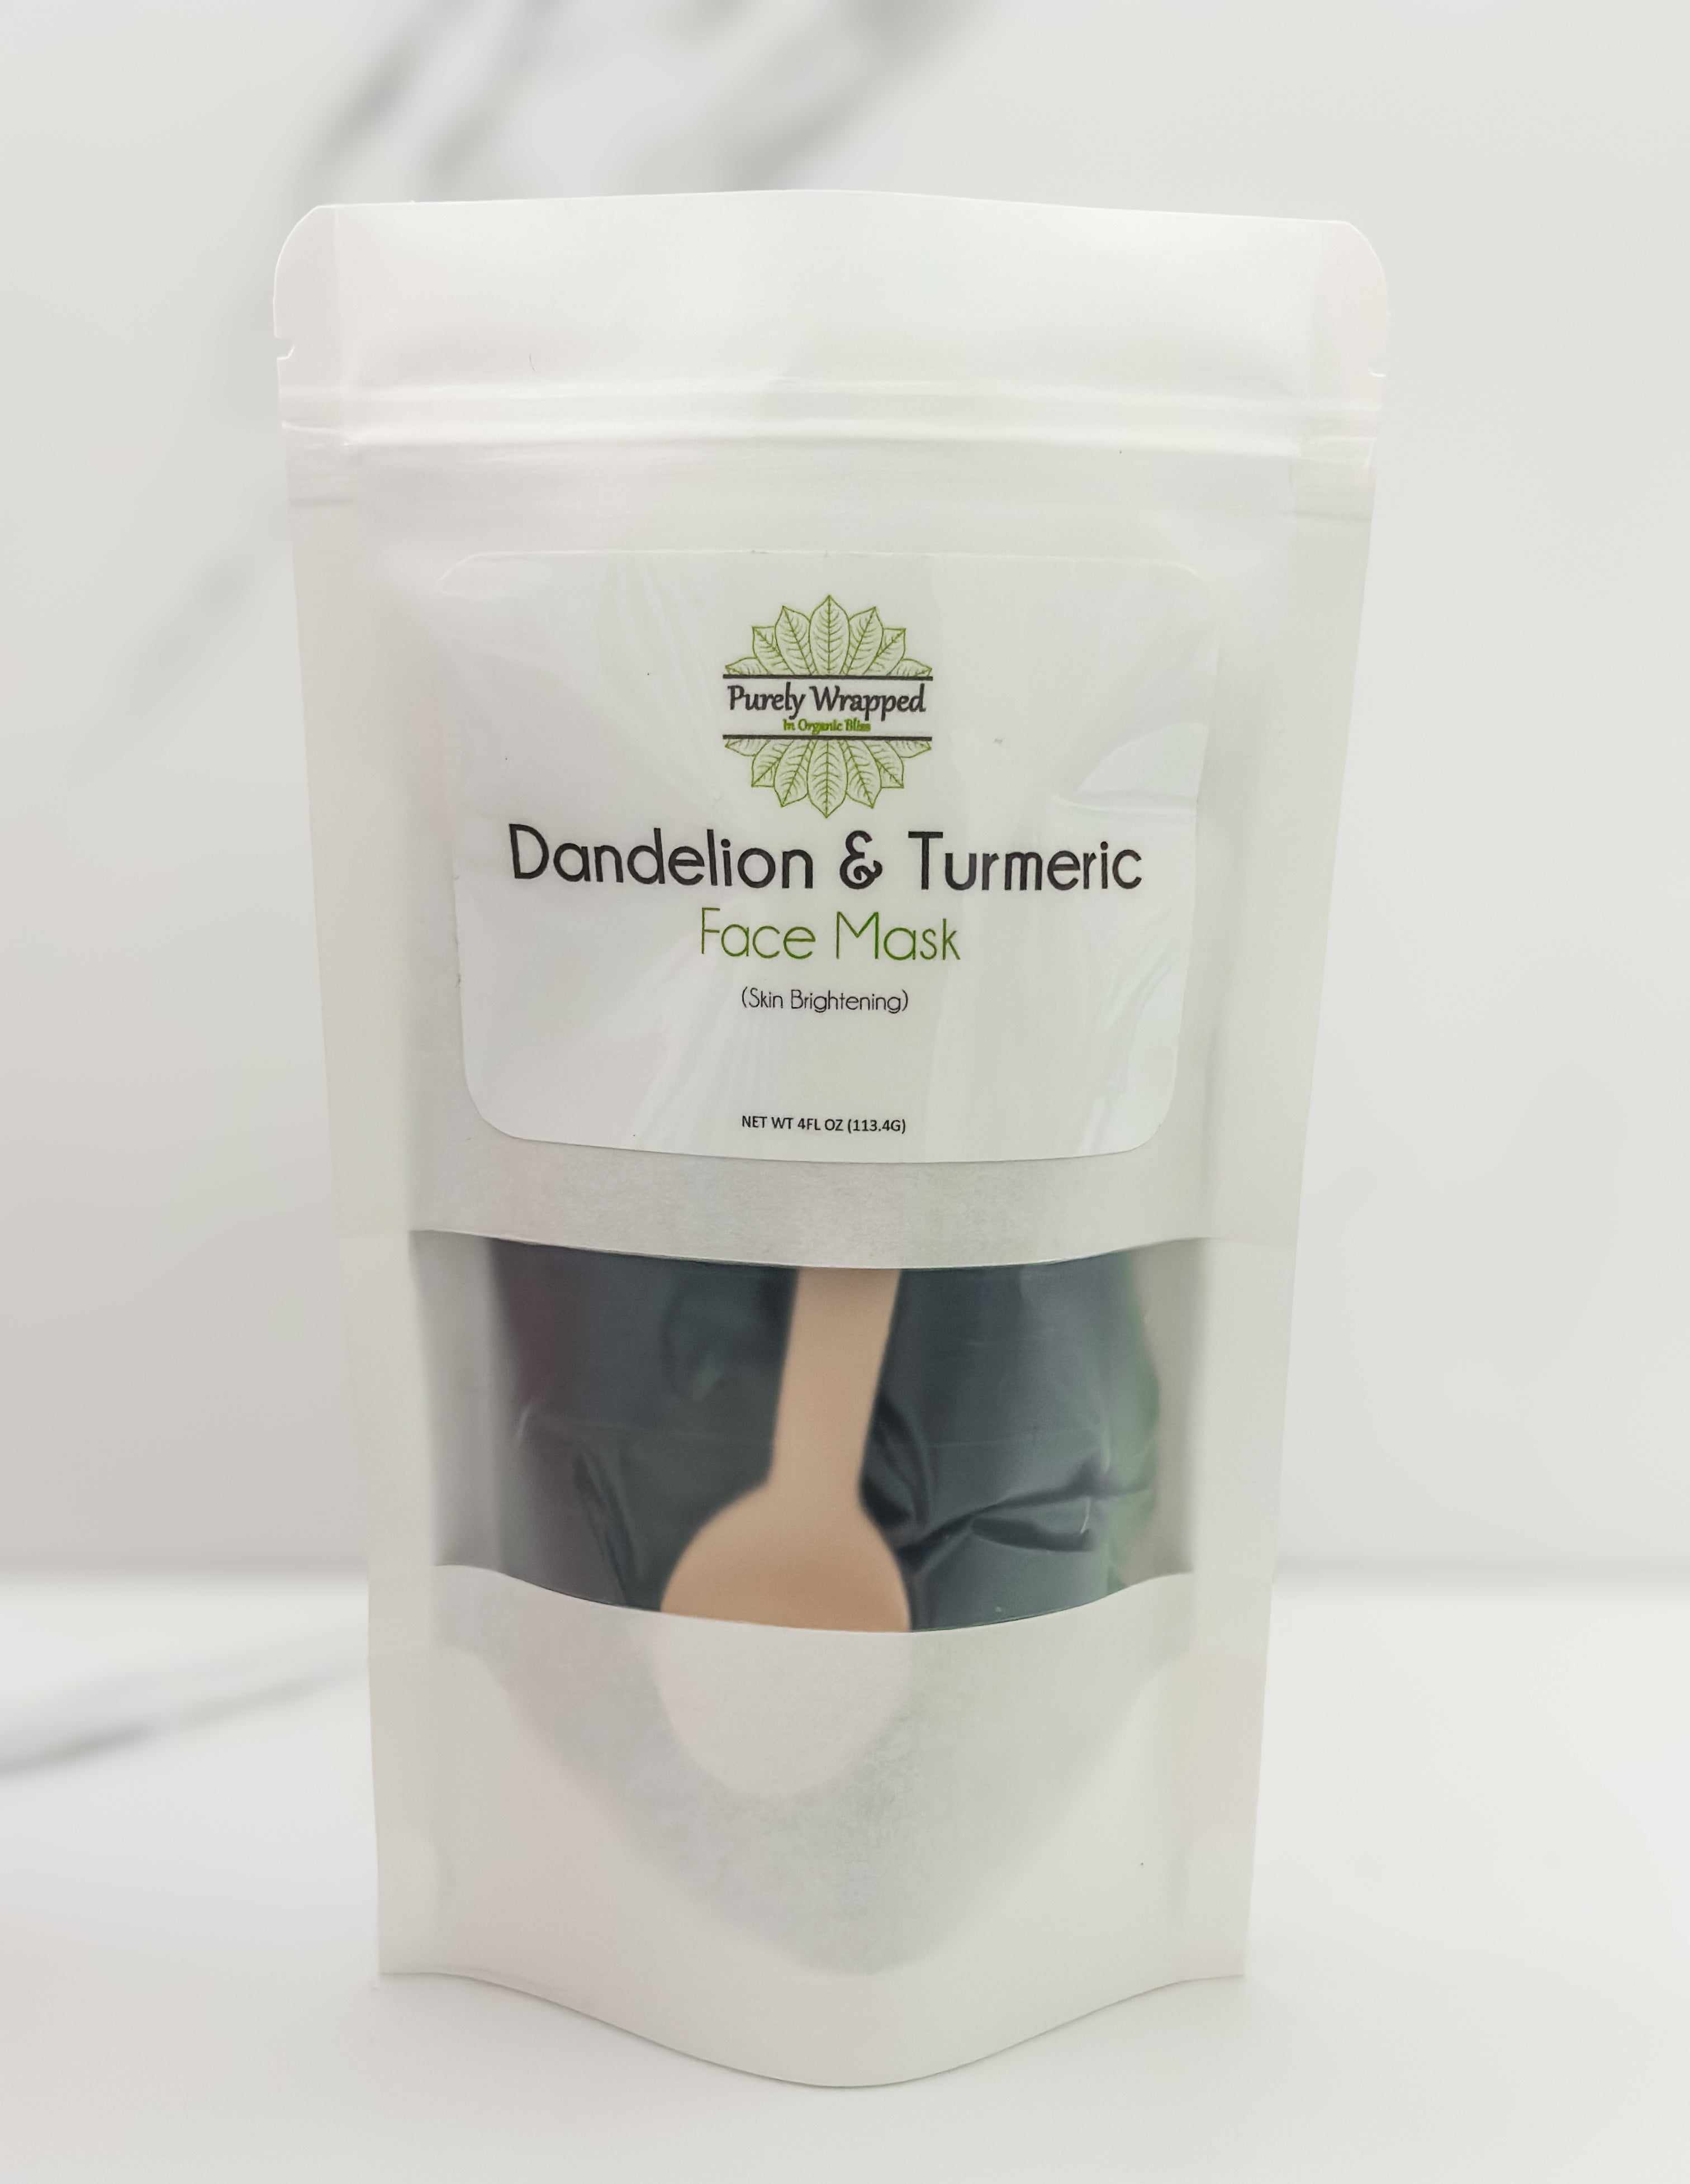 Dandelion & Turmeric Face Mask